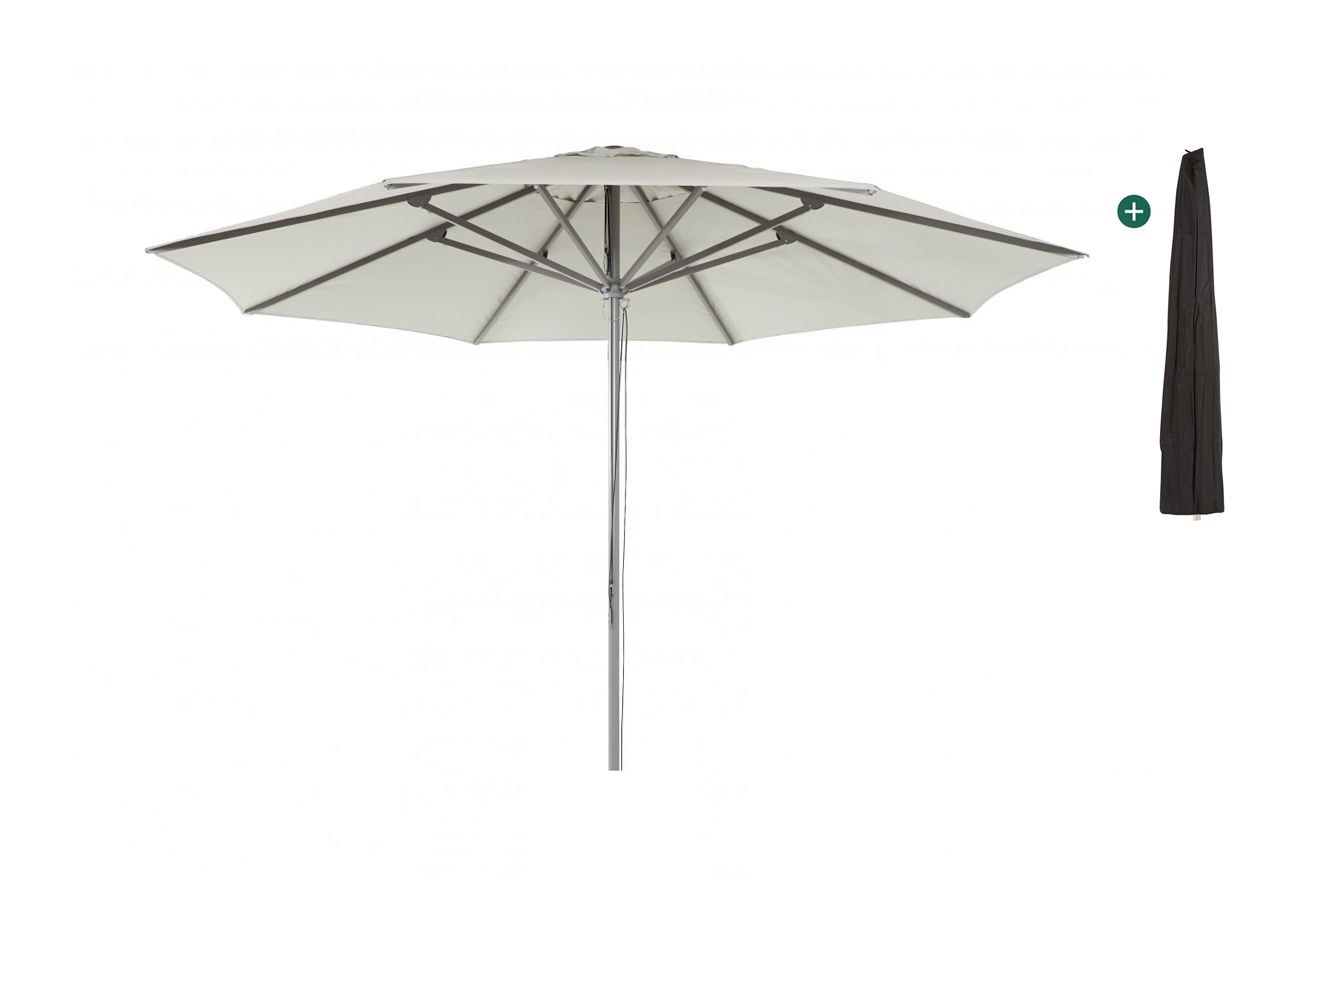 Shadowline Cuba parasol ø 400cm